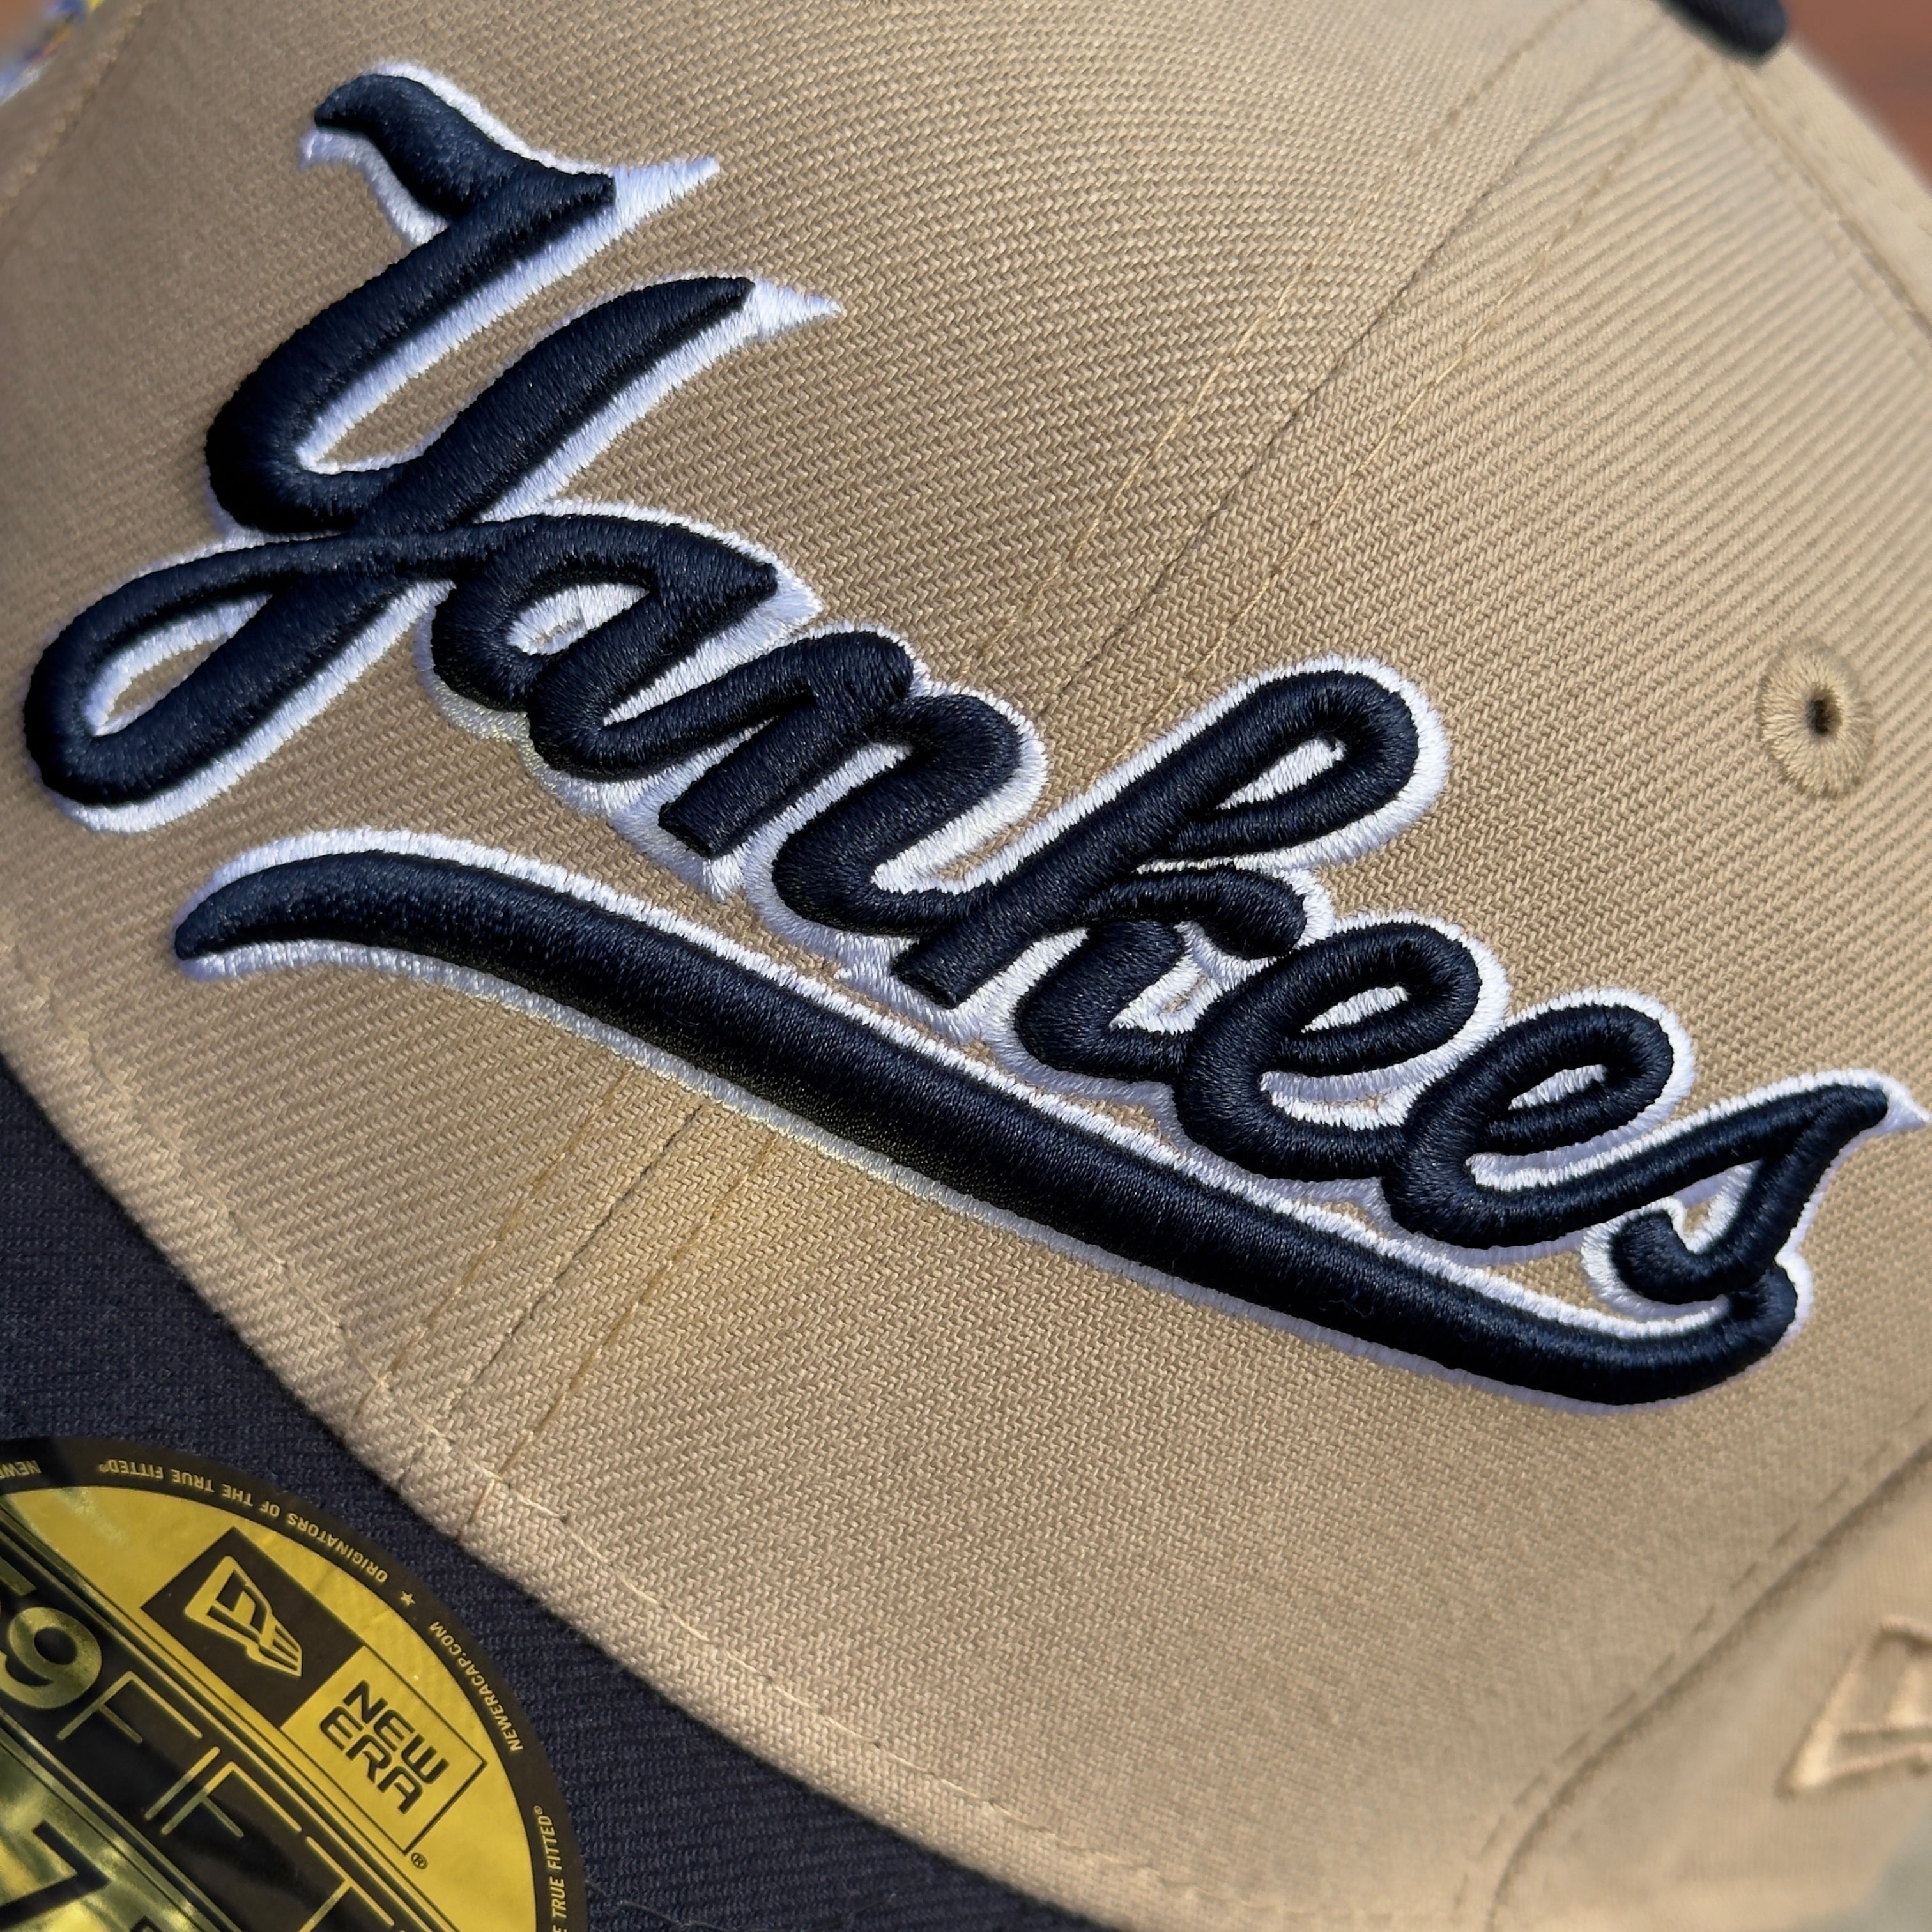 7 5/8  Khaki New York Yankees World Series 1996 59fifty New Era Fitted Cap Hat